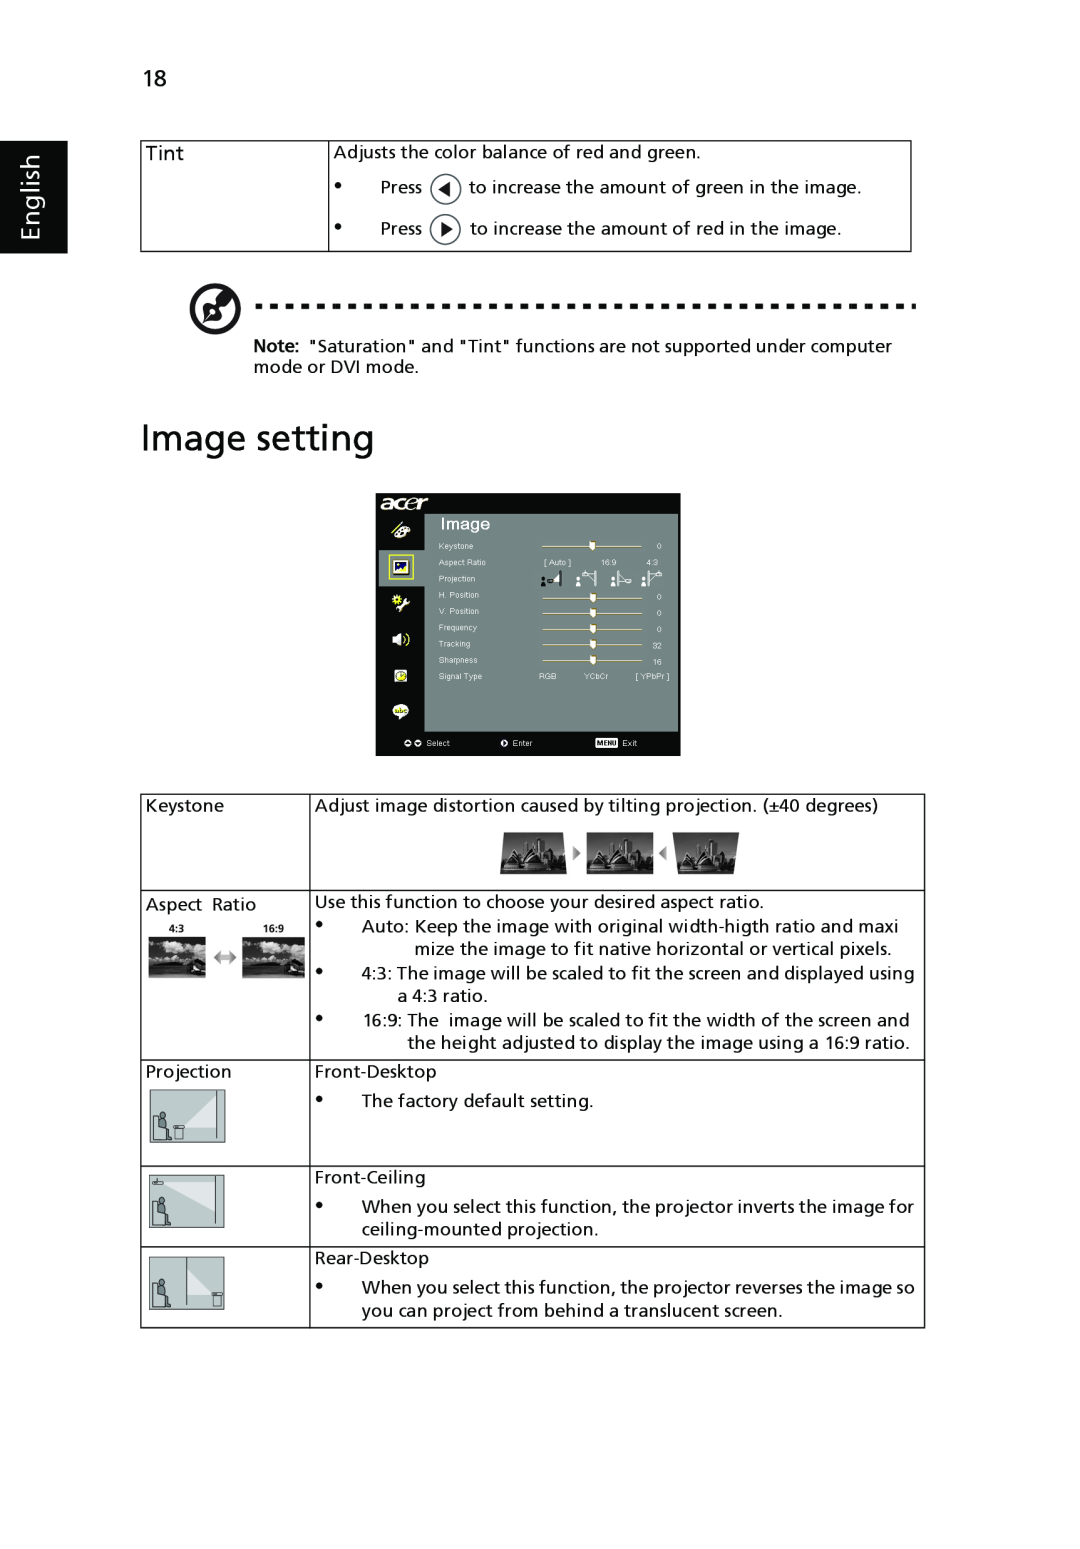 Acer P3150 Series, P3250 Series manual Image setting, English, Tint 